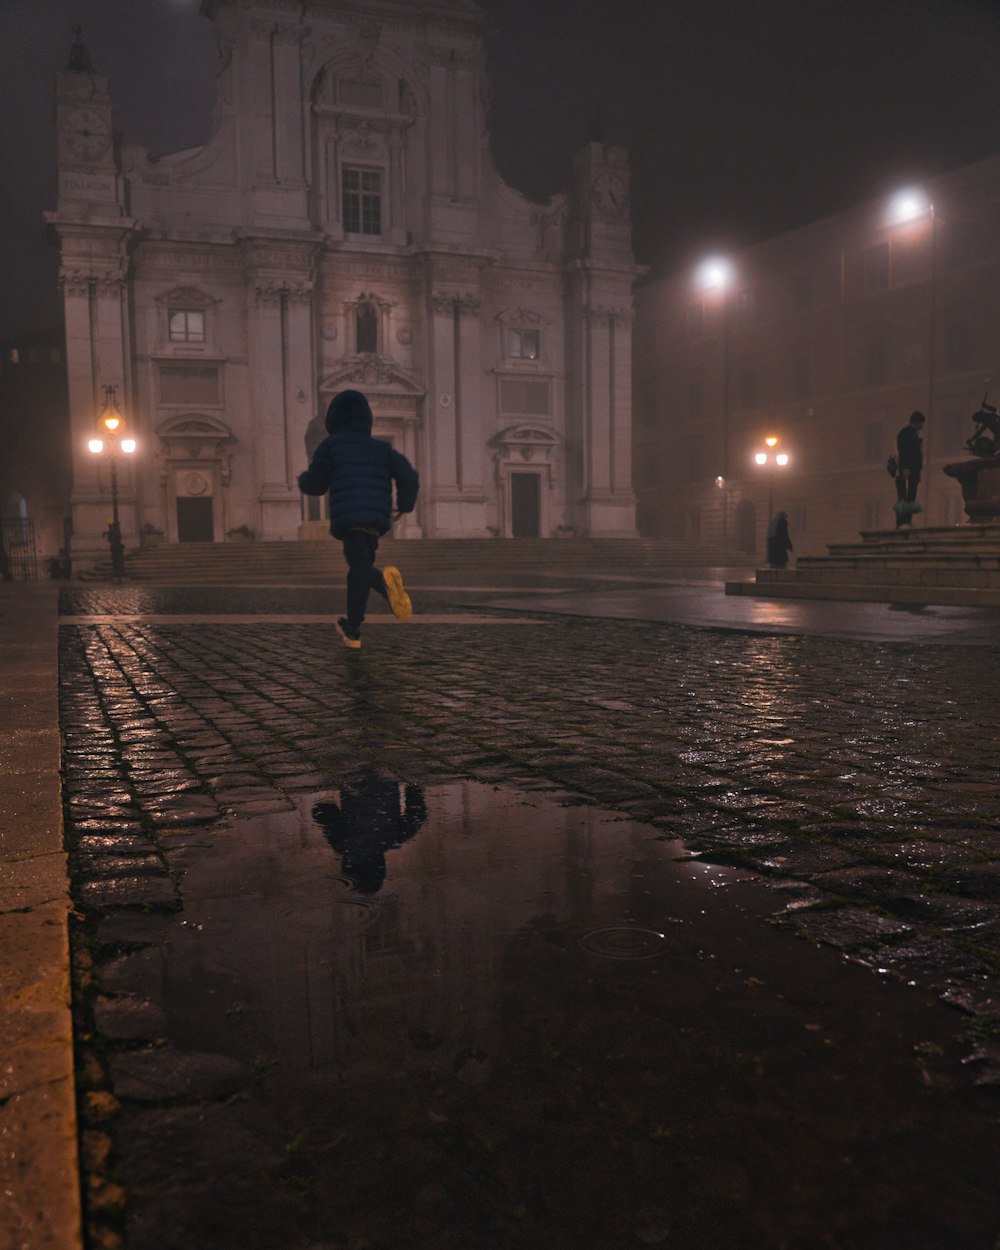 a person walking in a wet street